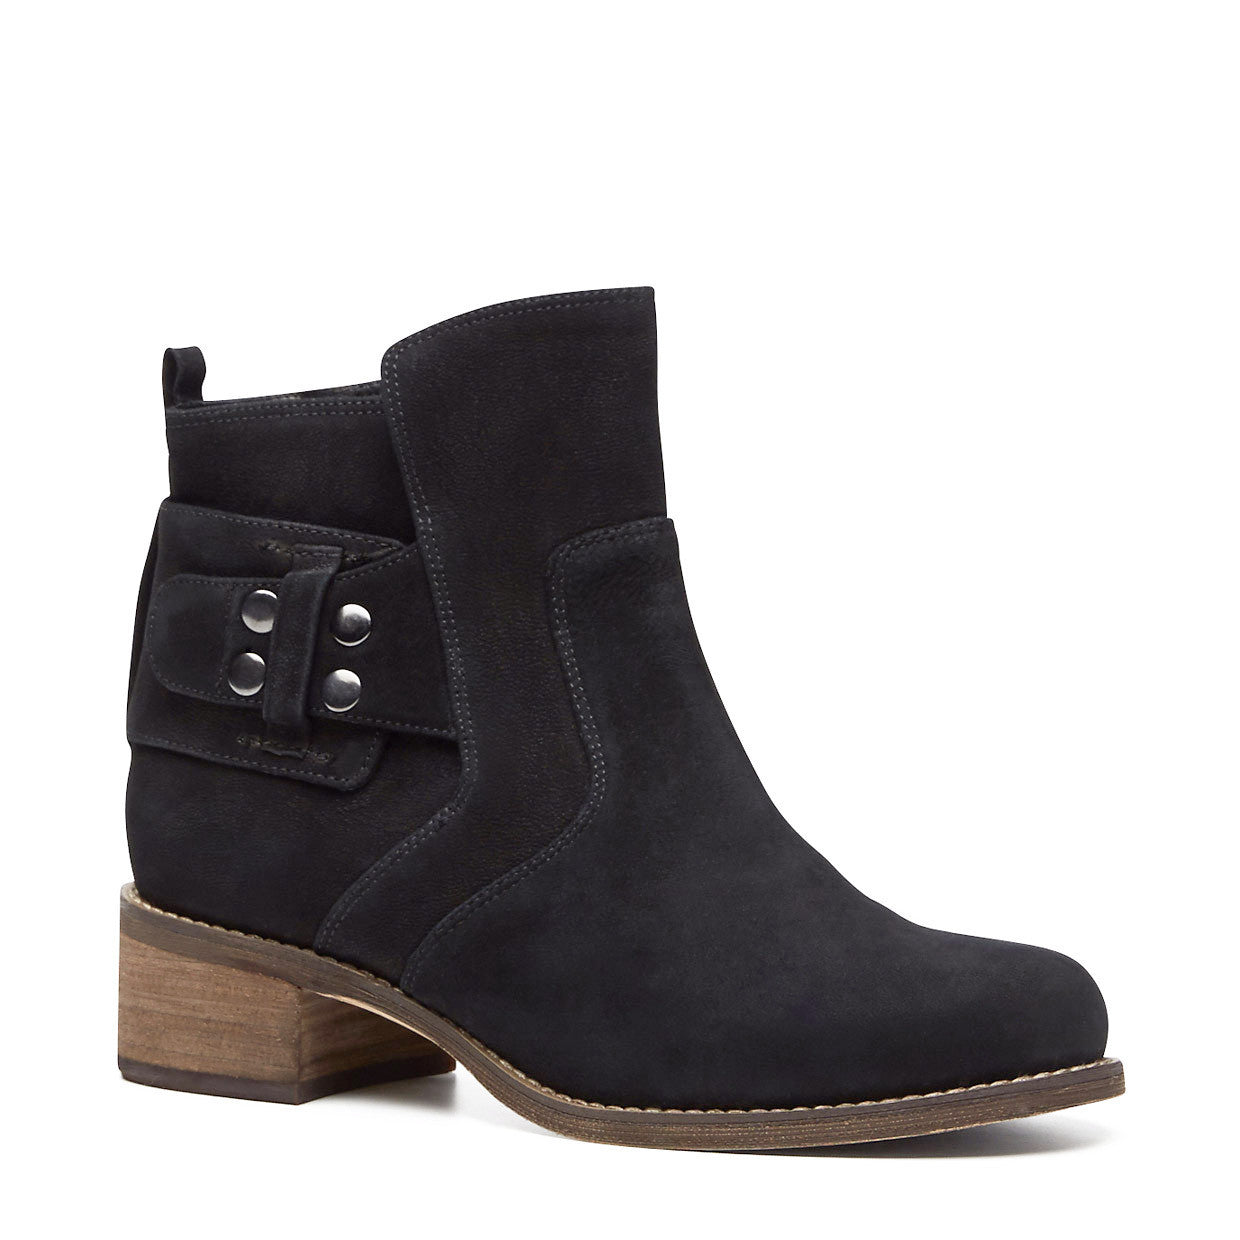 Harlequin Belle Cloudstomp Boot Black Leather